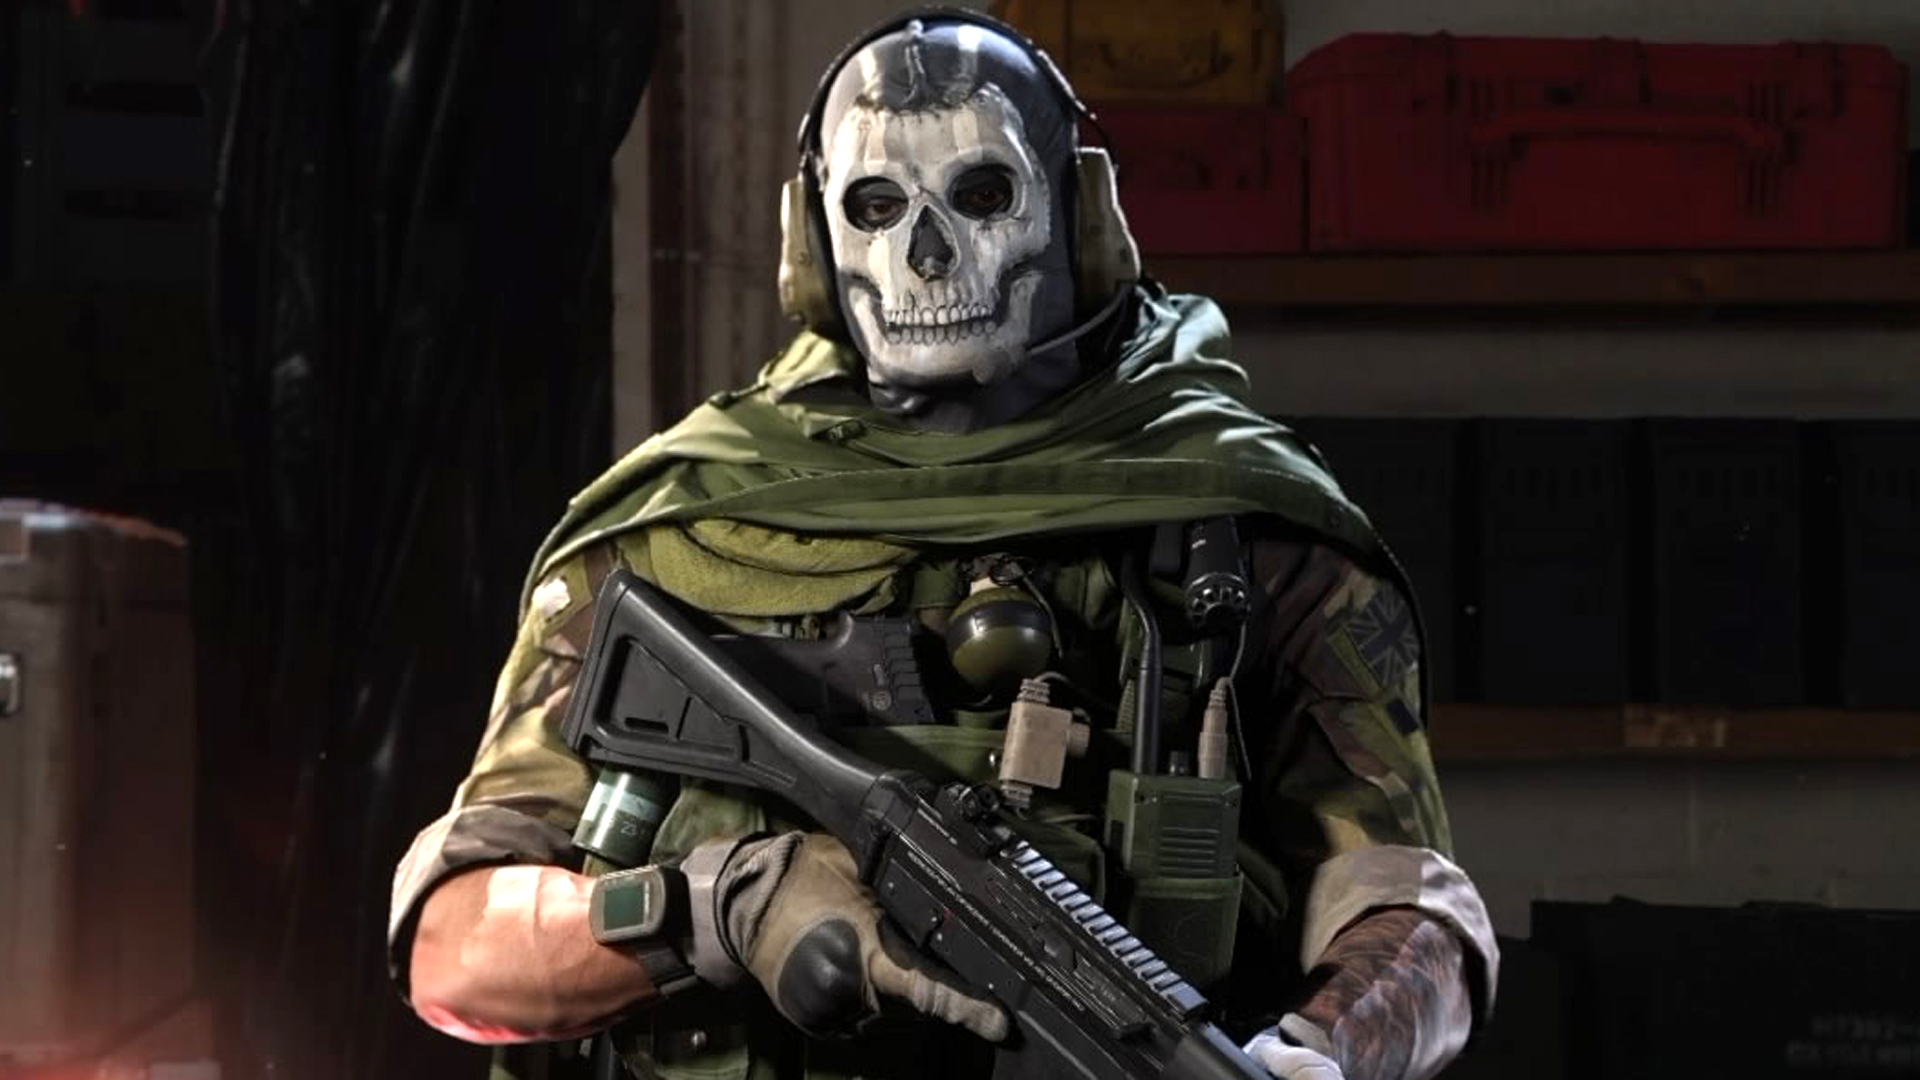 Ghost confirmed” for Call of Duty: Modern Warfare season 2